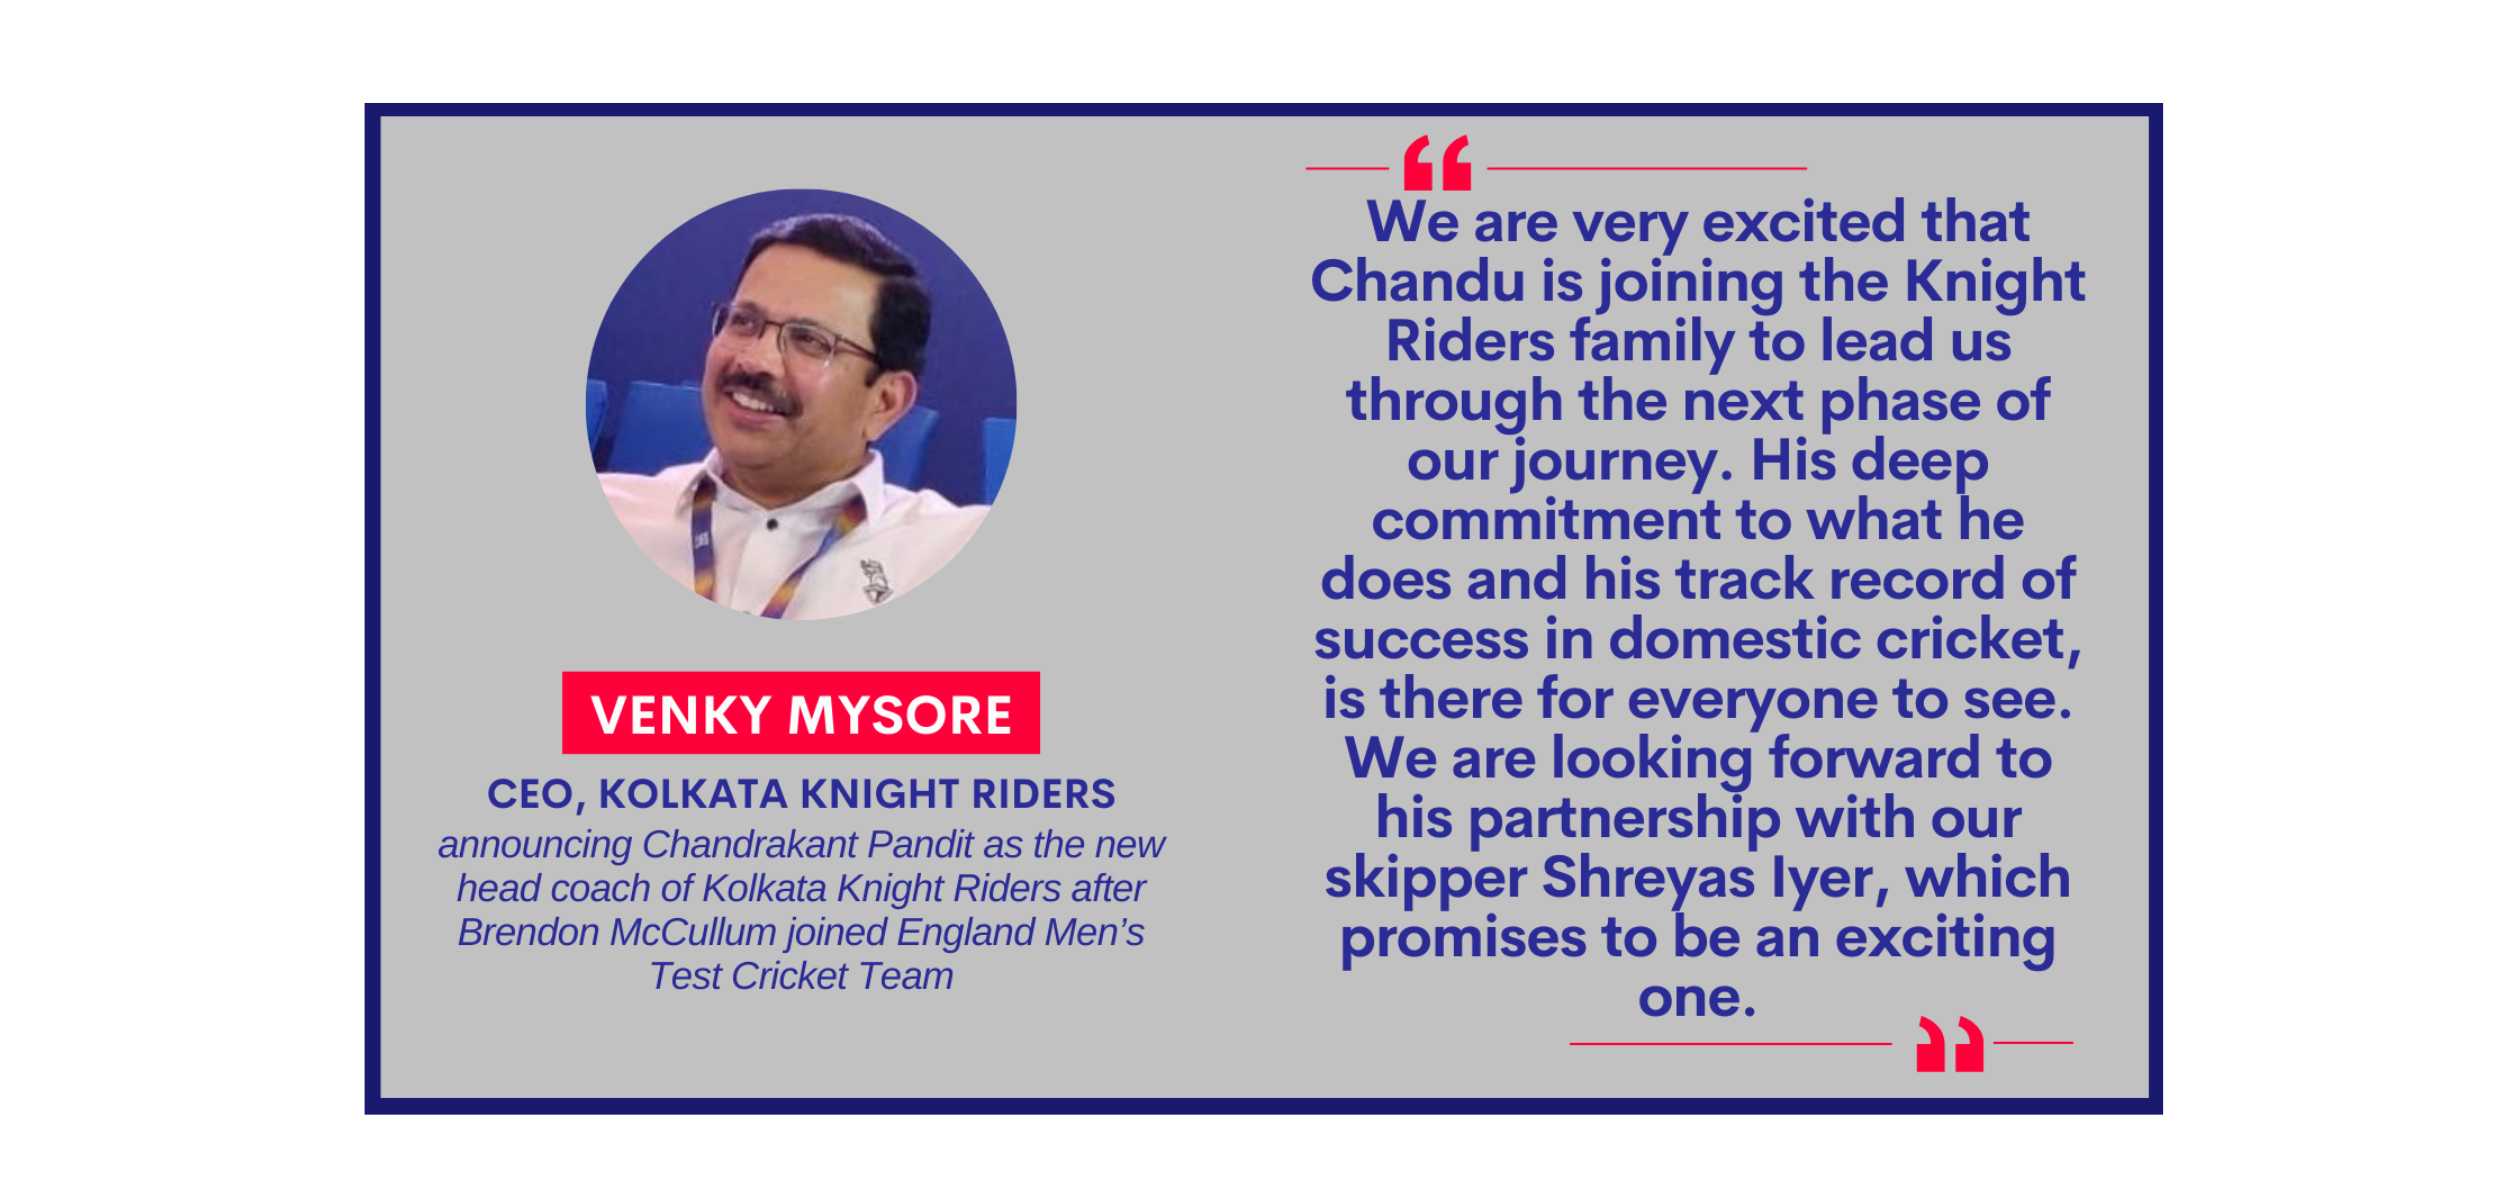 Venky Mysore, CEO, Kolkata Knight Riders announcing Chandrakant Pandit as the new head coach of Kolkata Knight Riders after Brendon McCullum joined England Men’s Test Cricket Team